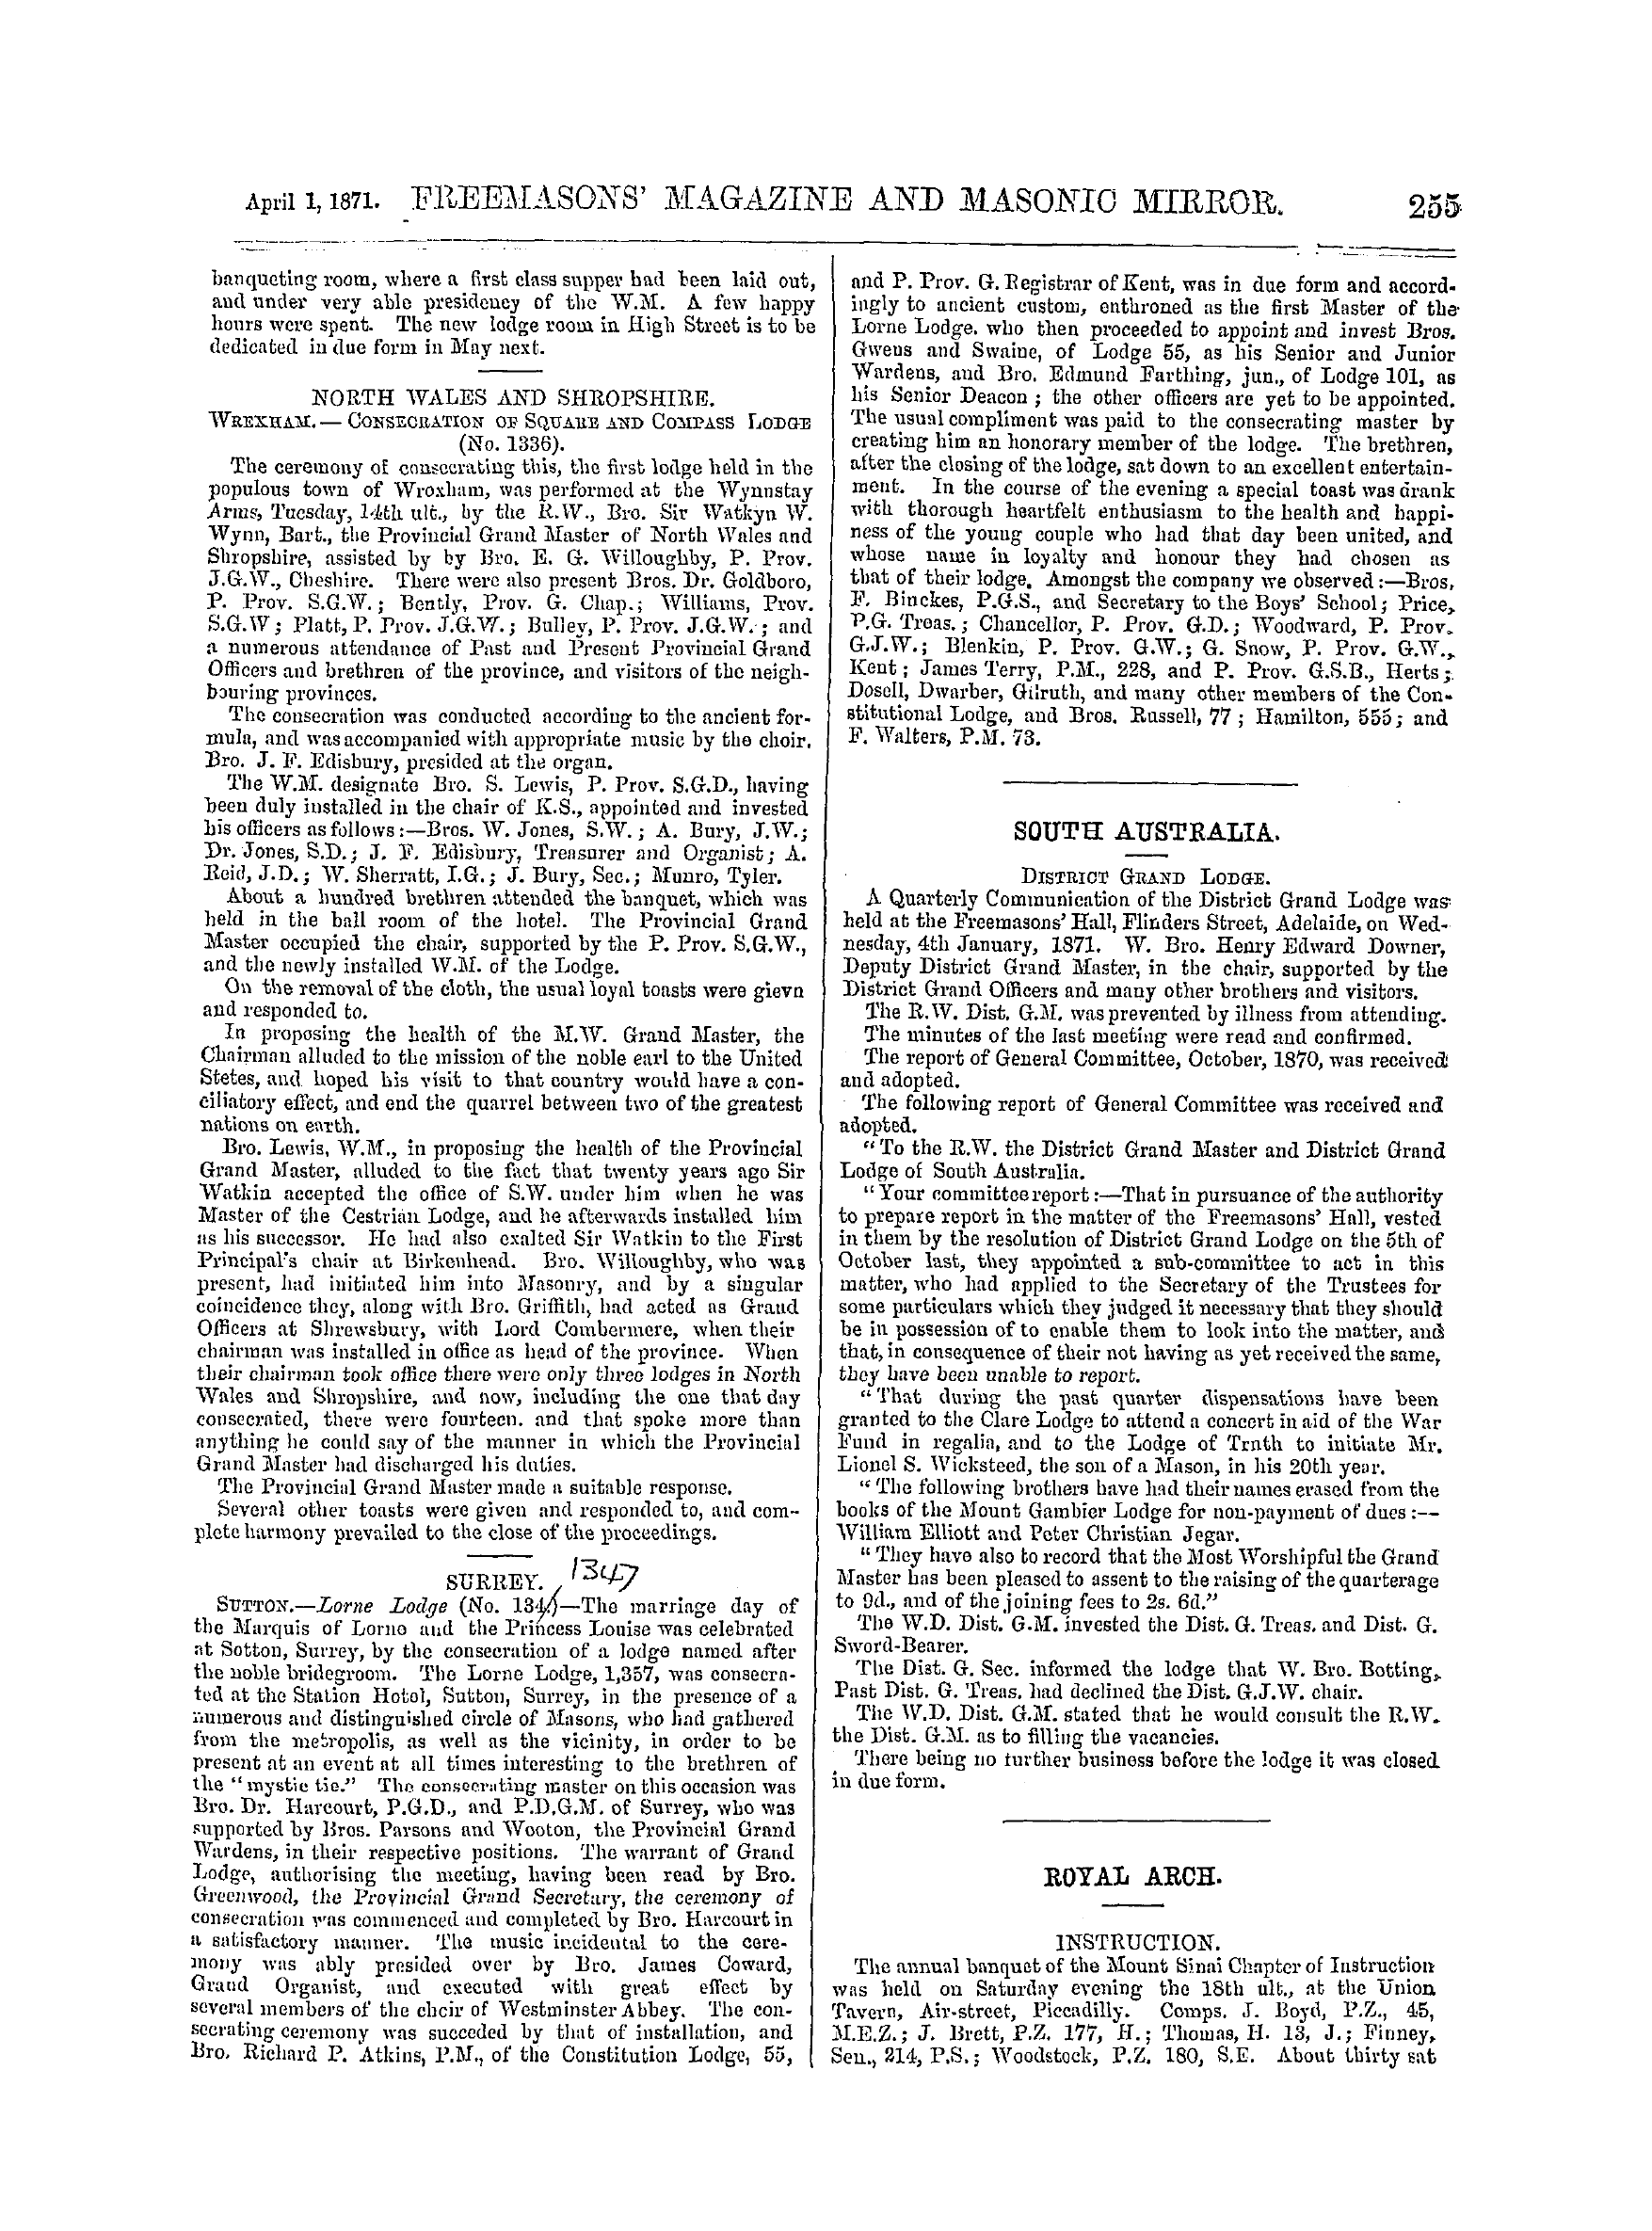 The Freemasons' Monthly Magazine: 1871-04-01 - Provincial.